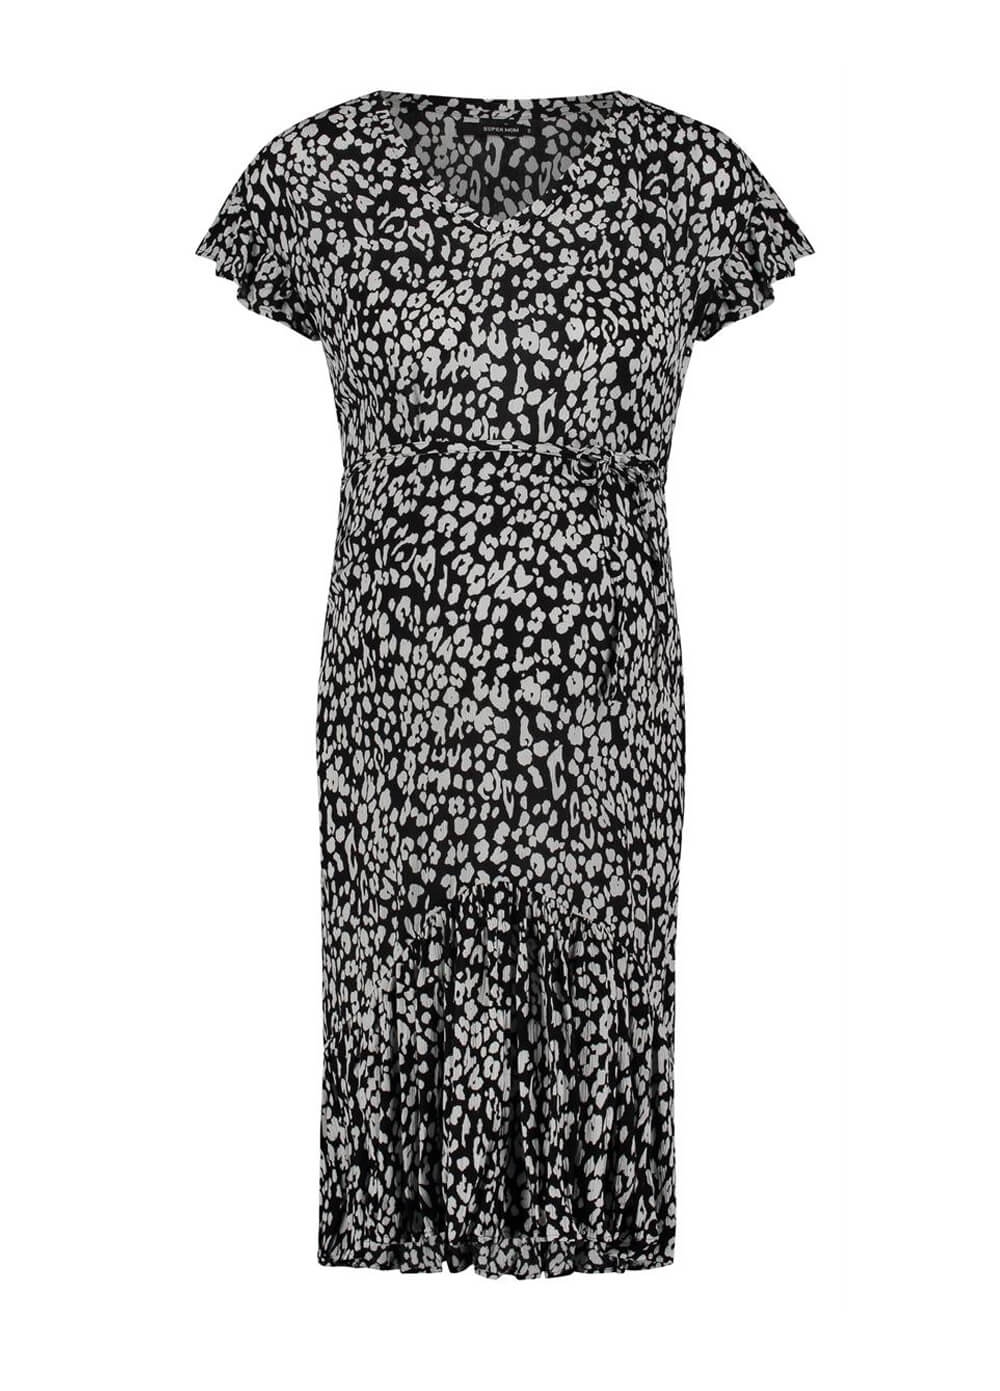 Supermom - Black Leopard Print Maternity Dress | Queen Bee